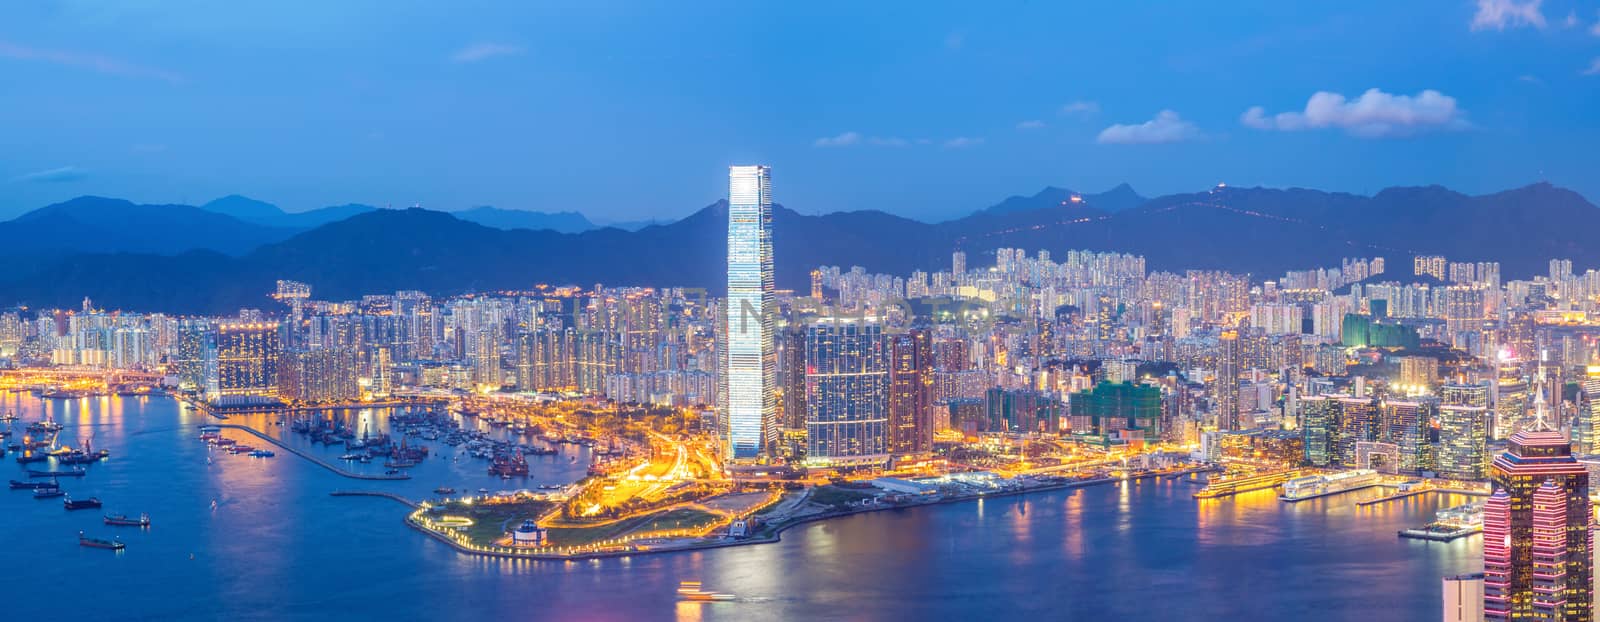 Panorama Hong Kong Skyline by vichie81